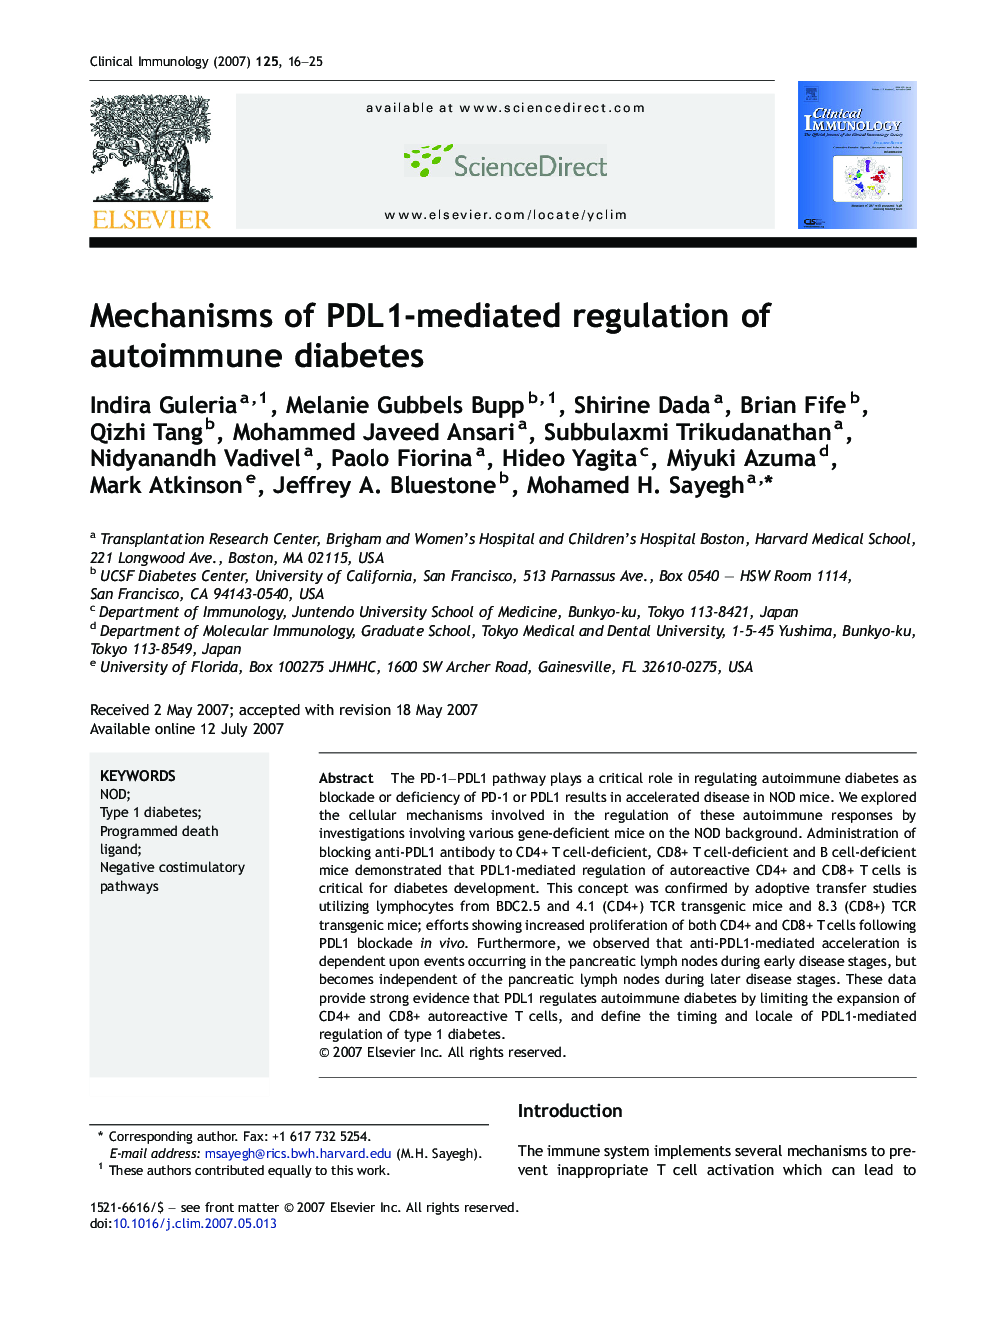 Mechanisms of PDL1-mediated regulation of autoimmune diabetes